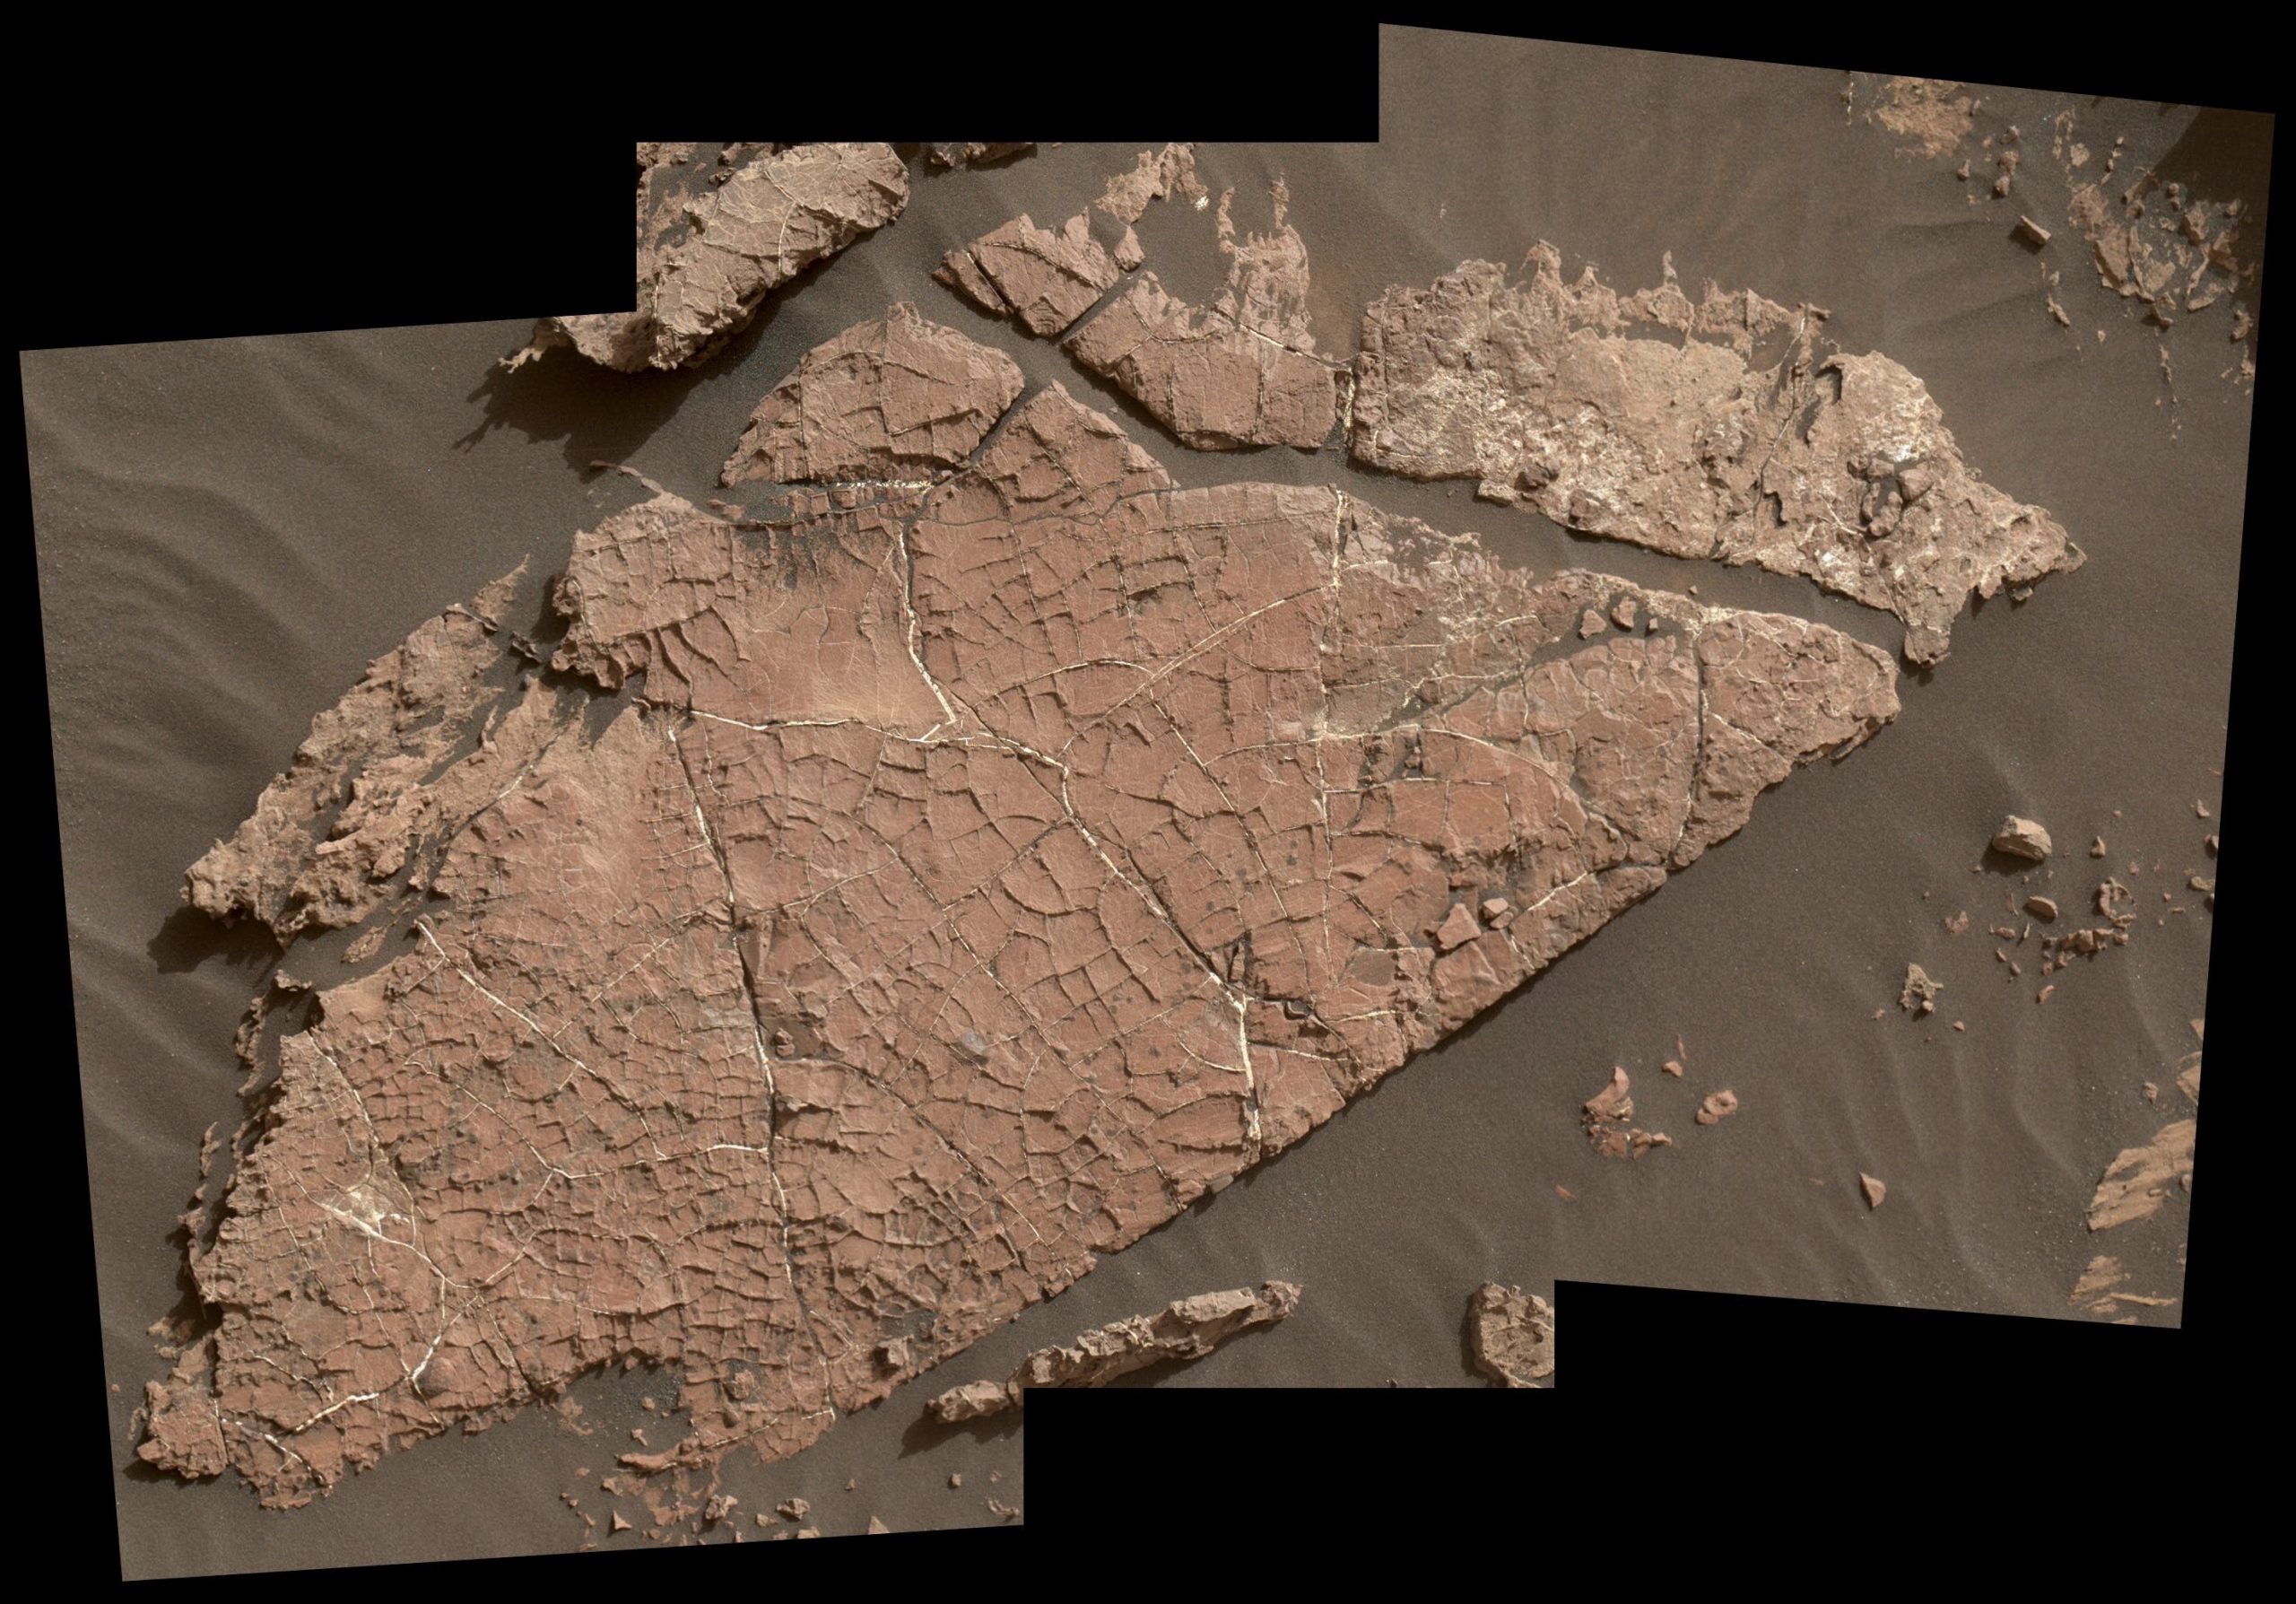 Composite photos of mudcracks seen in Gale Crater, Mars.